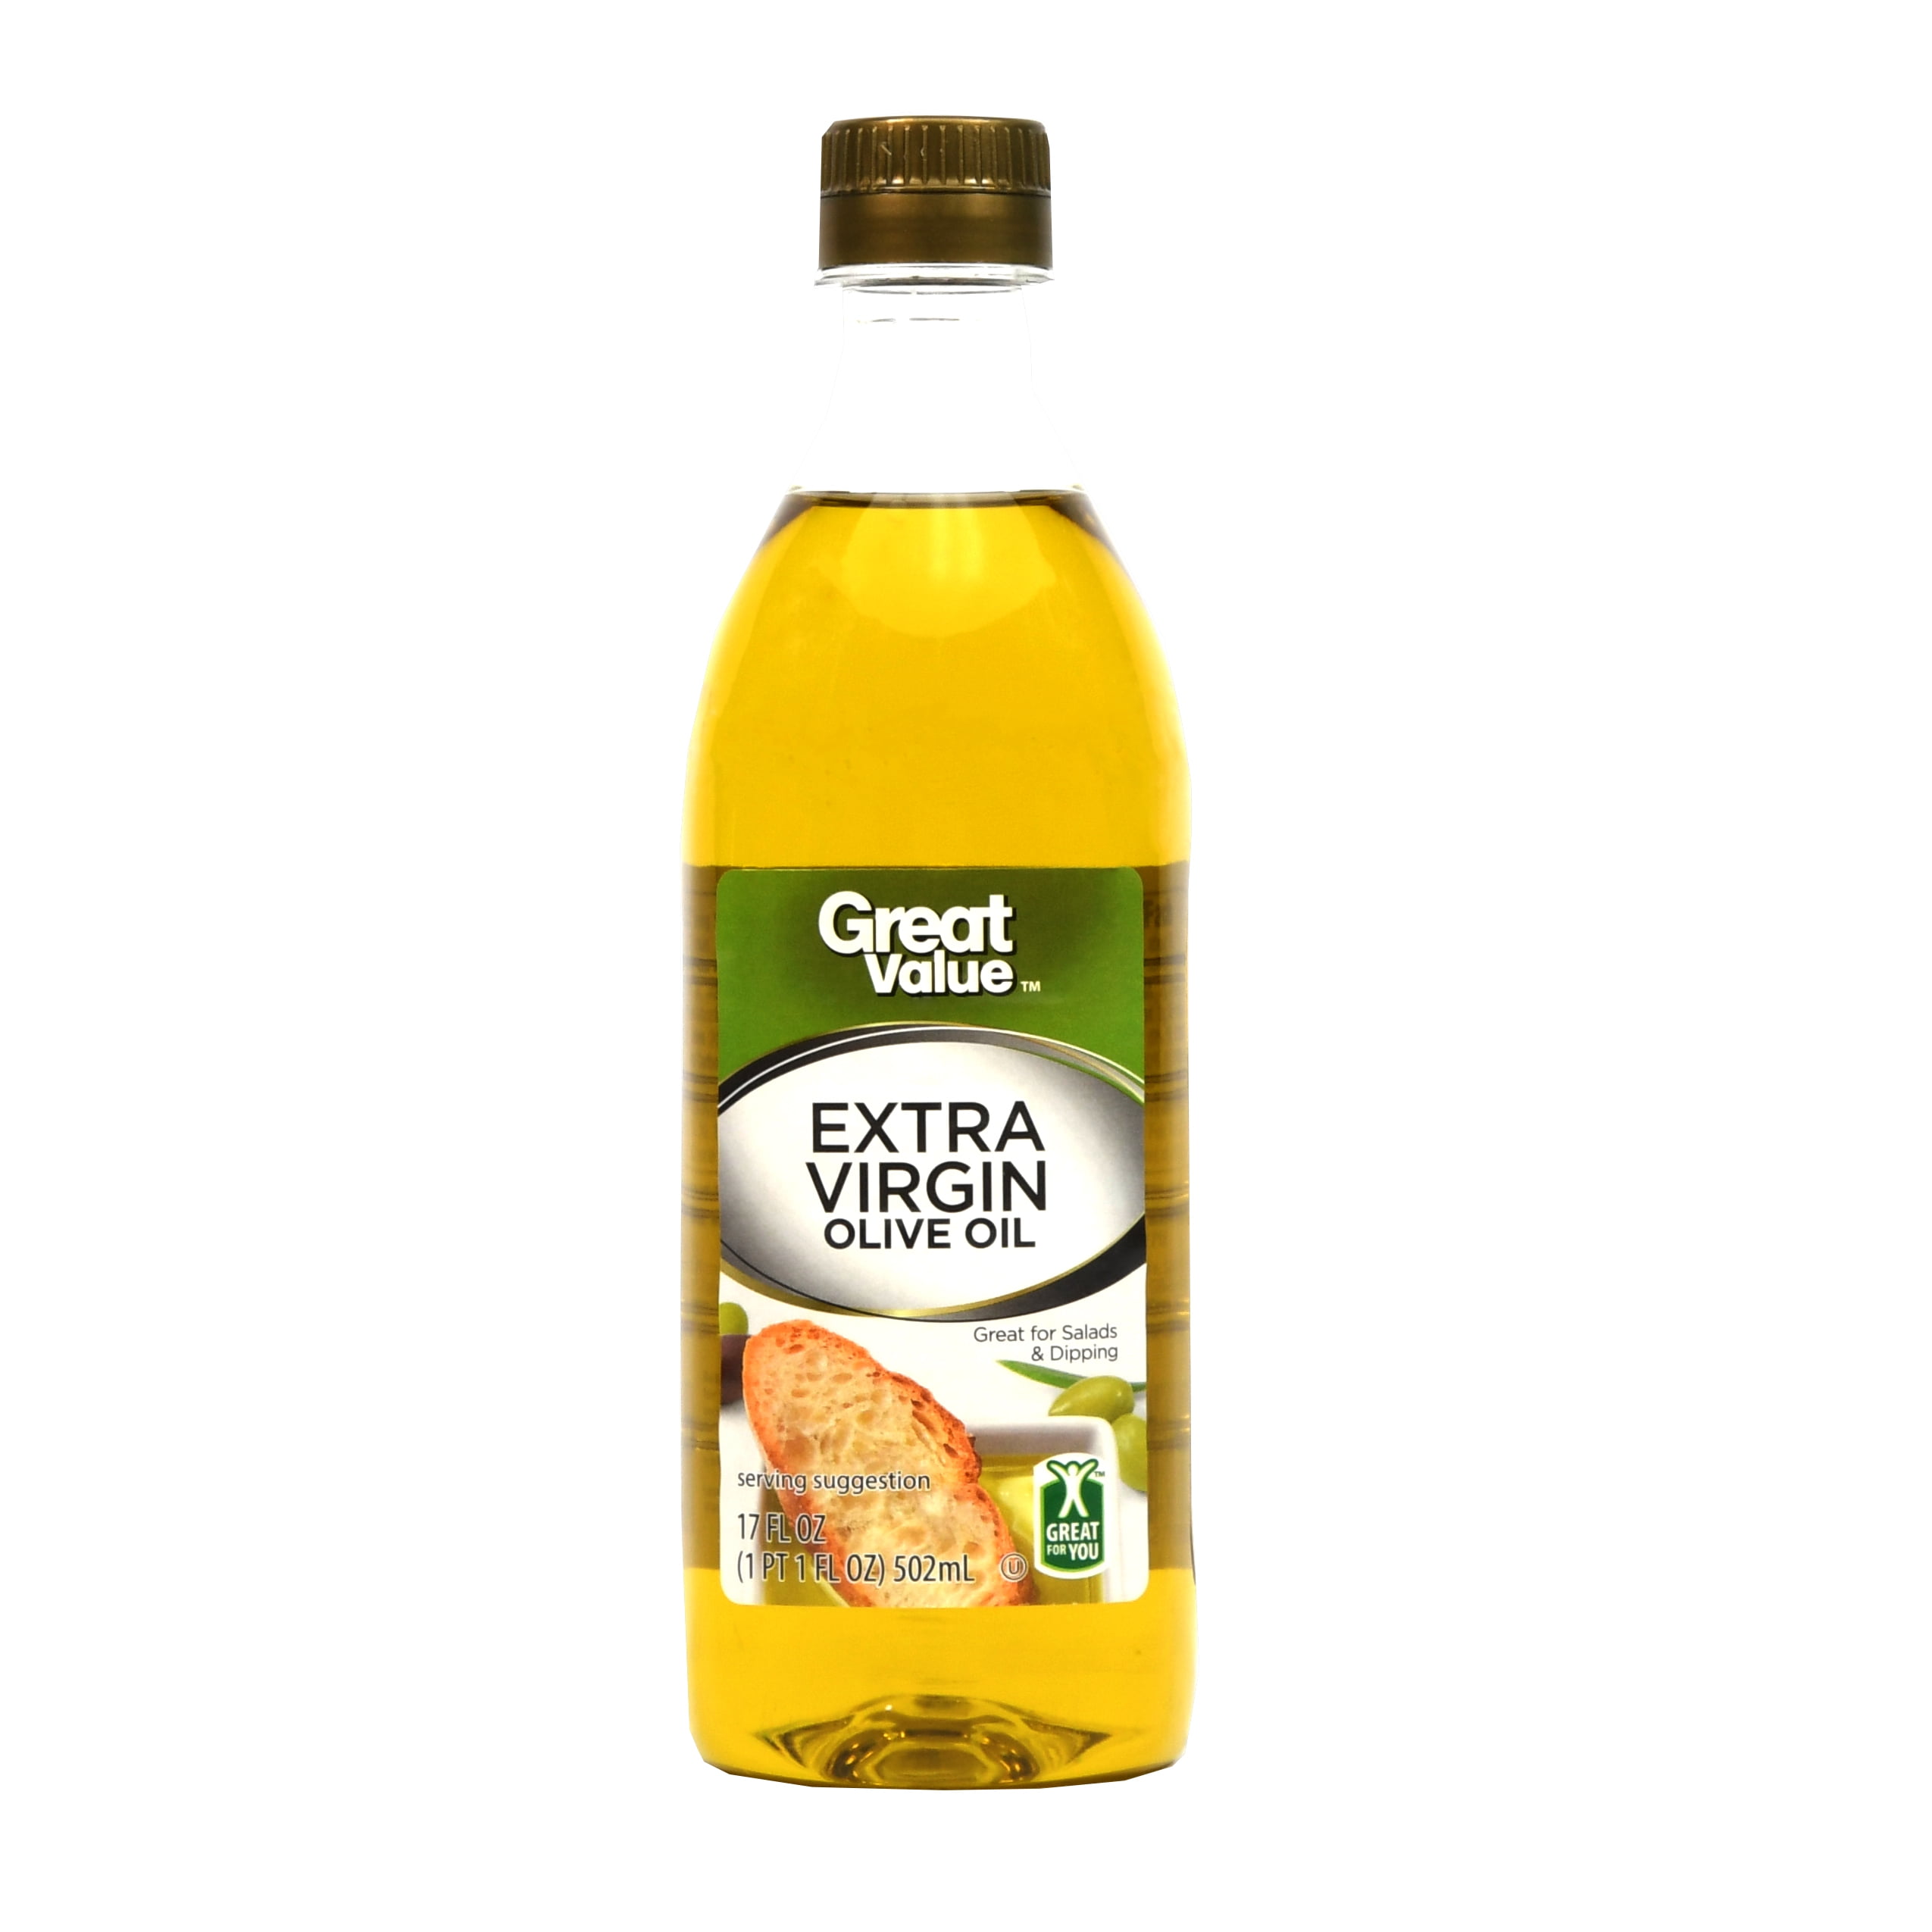 Great Value Extra Virgin Olive Oil 17 fl oz - Walmart.com ...